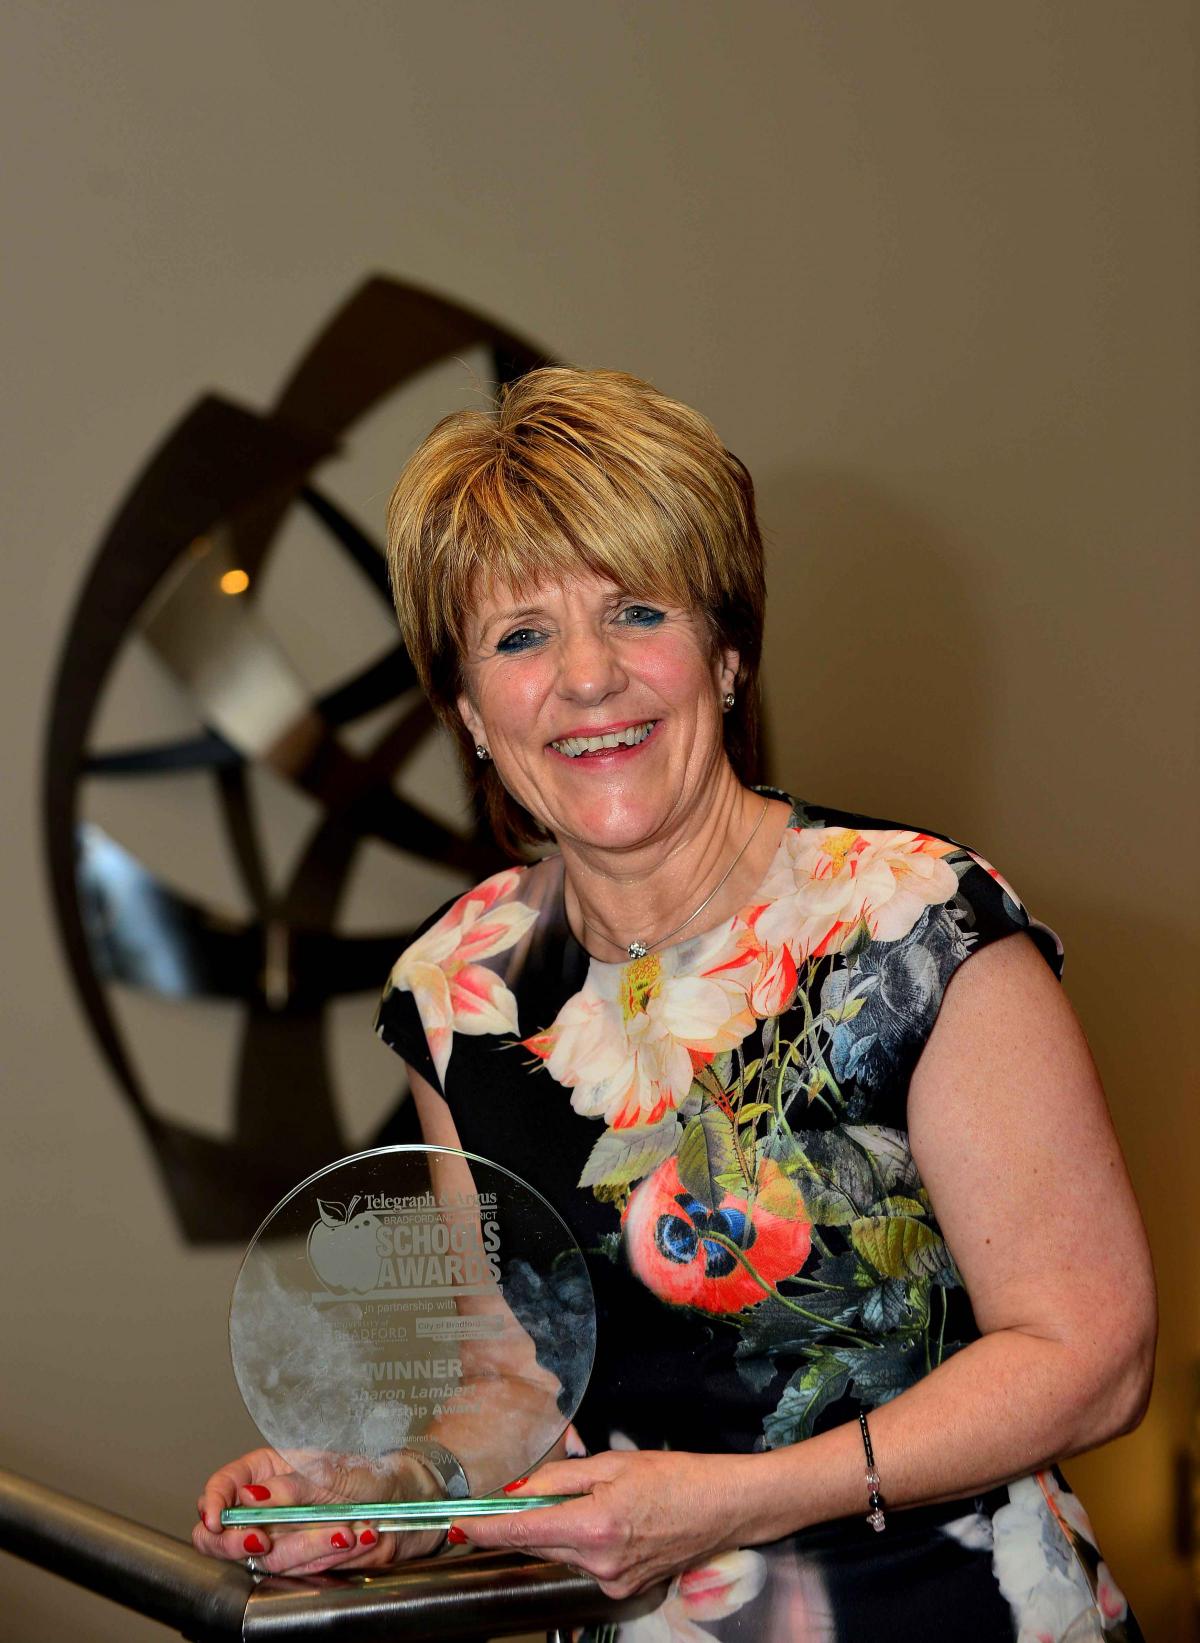 Sharon Lambert, head of Allerton Primary School and winner of the Leadership Award